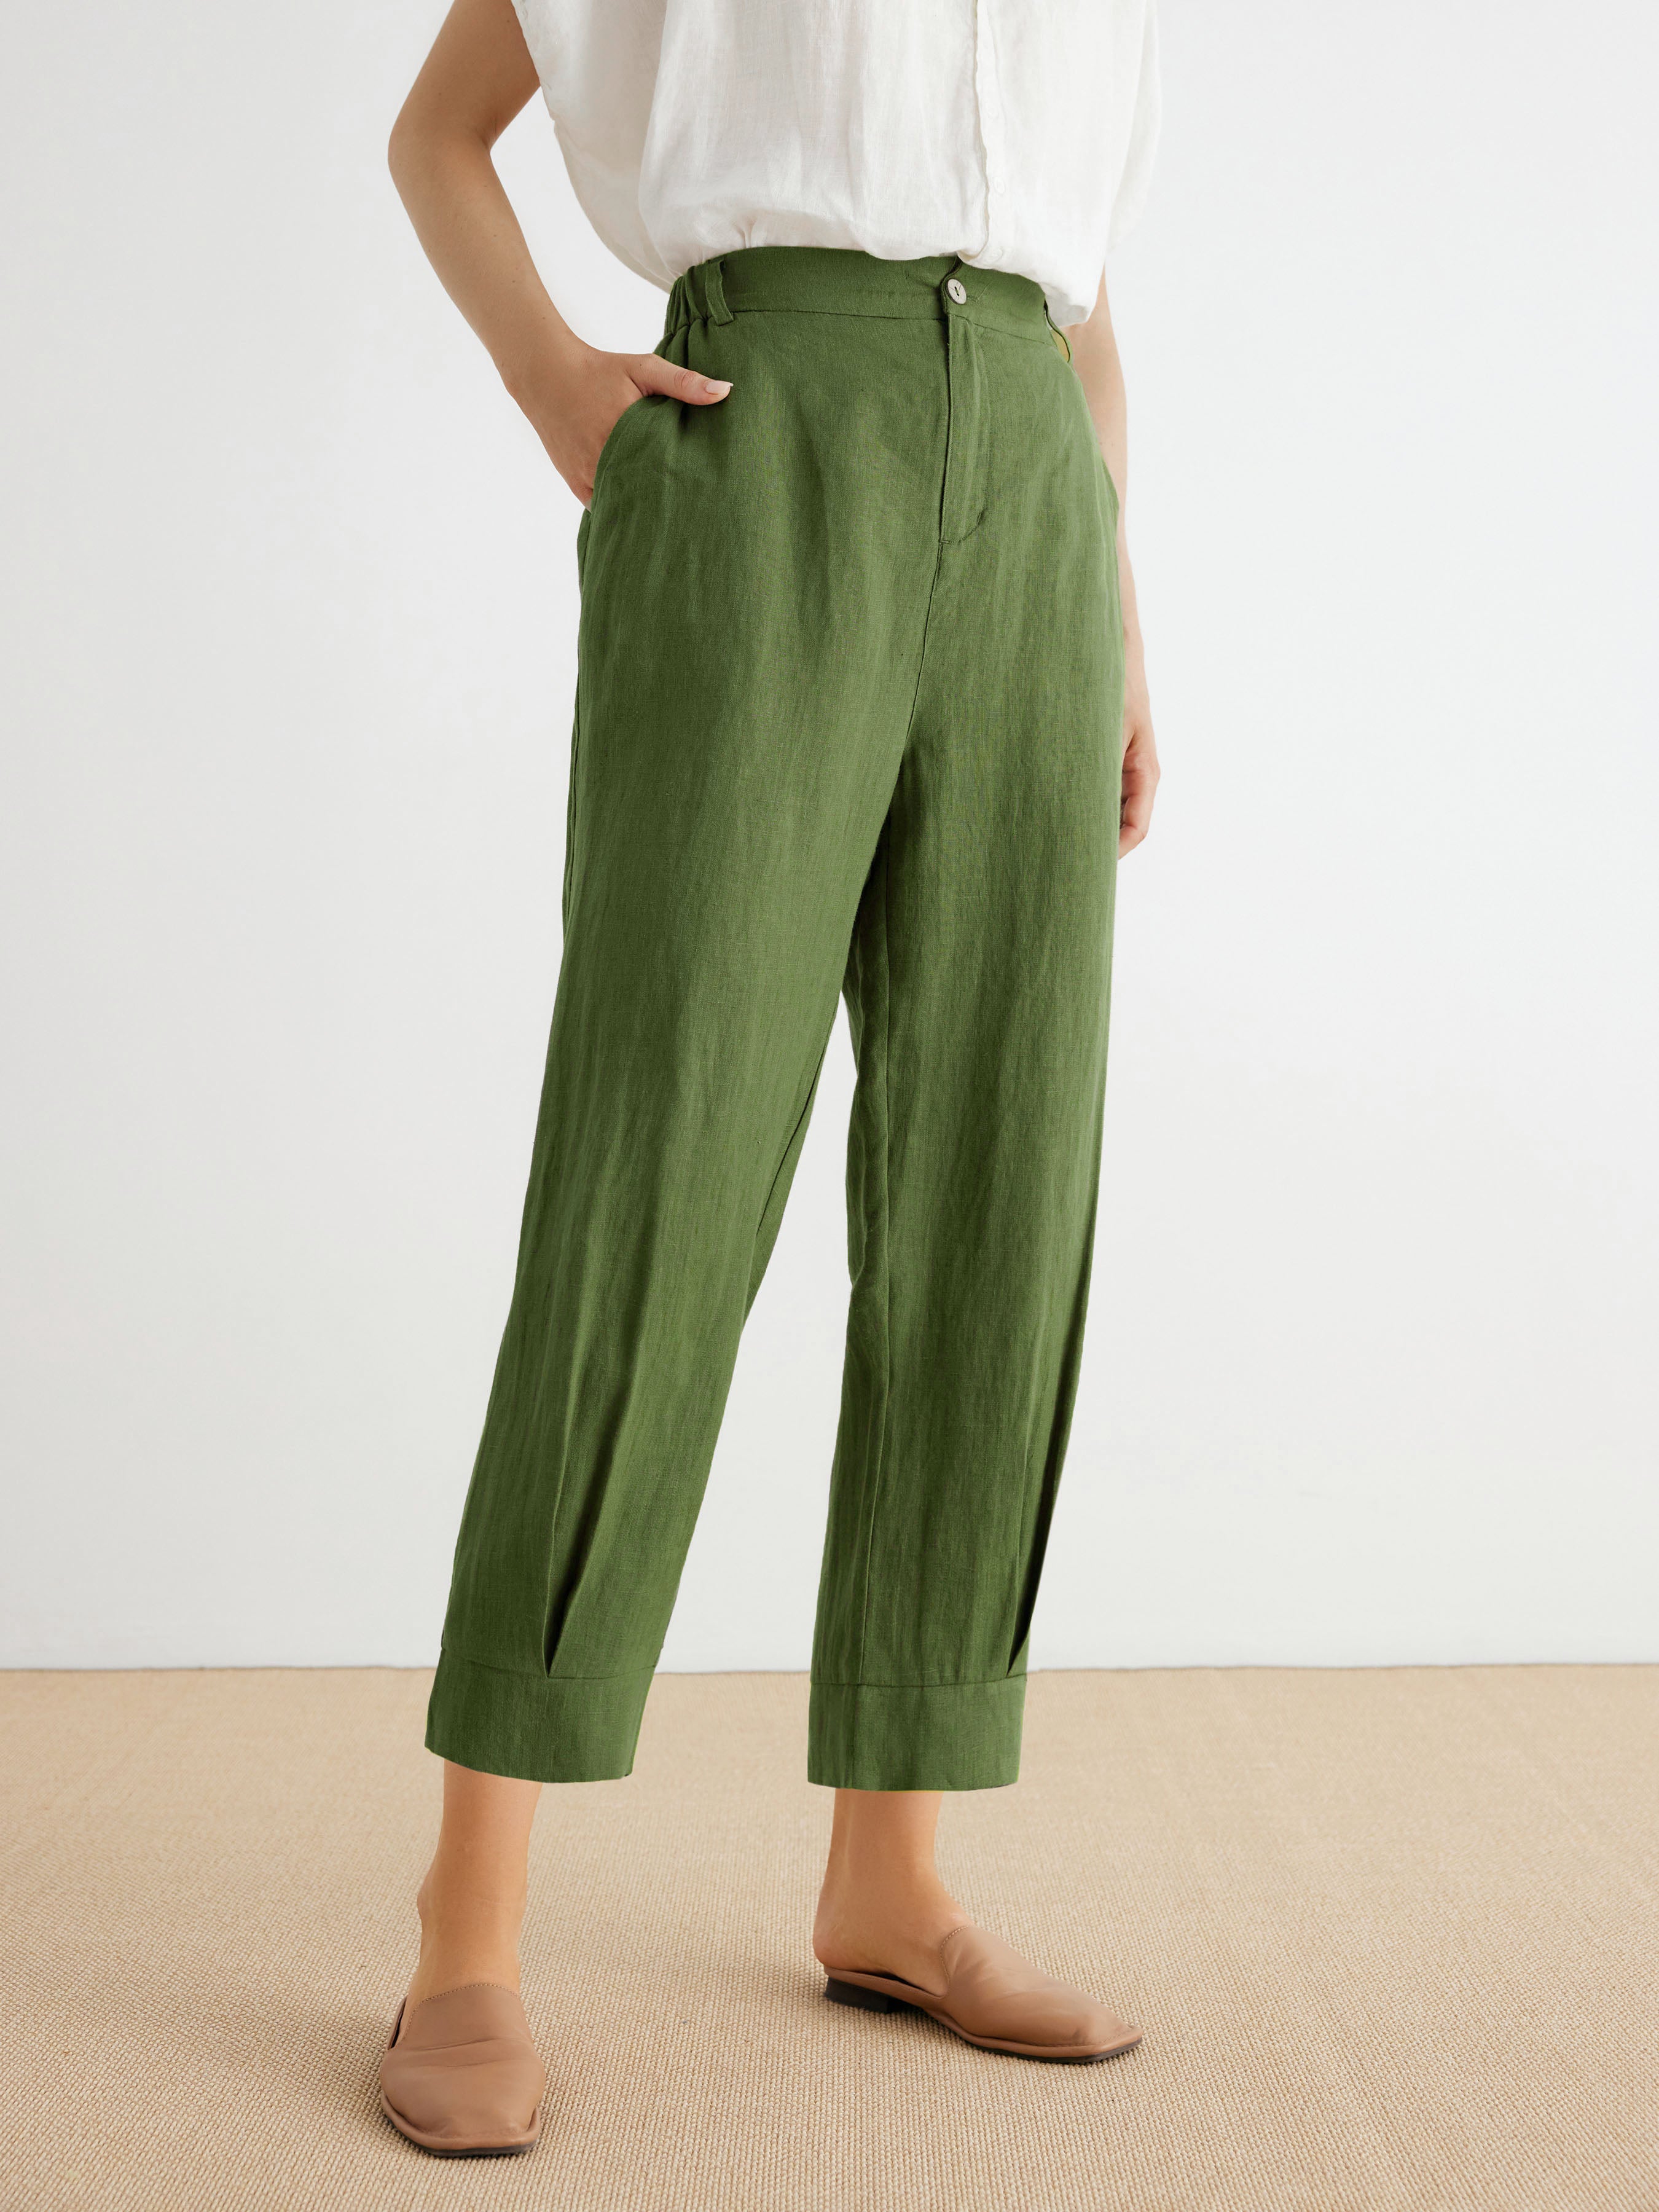 Easy Linen High Waisted Cropped Pants for Women - Aritika – aritika